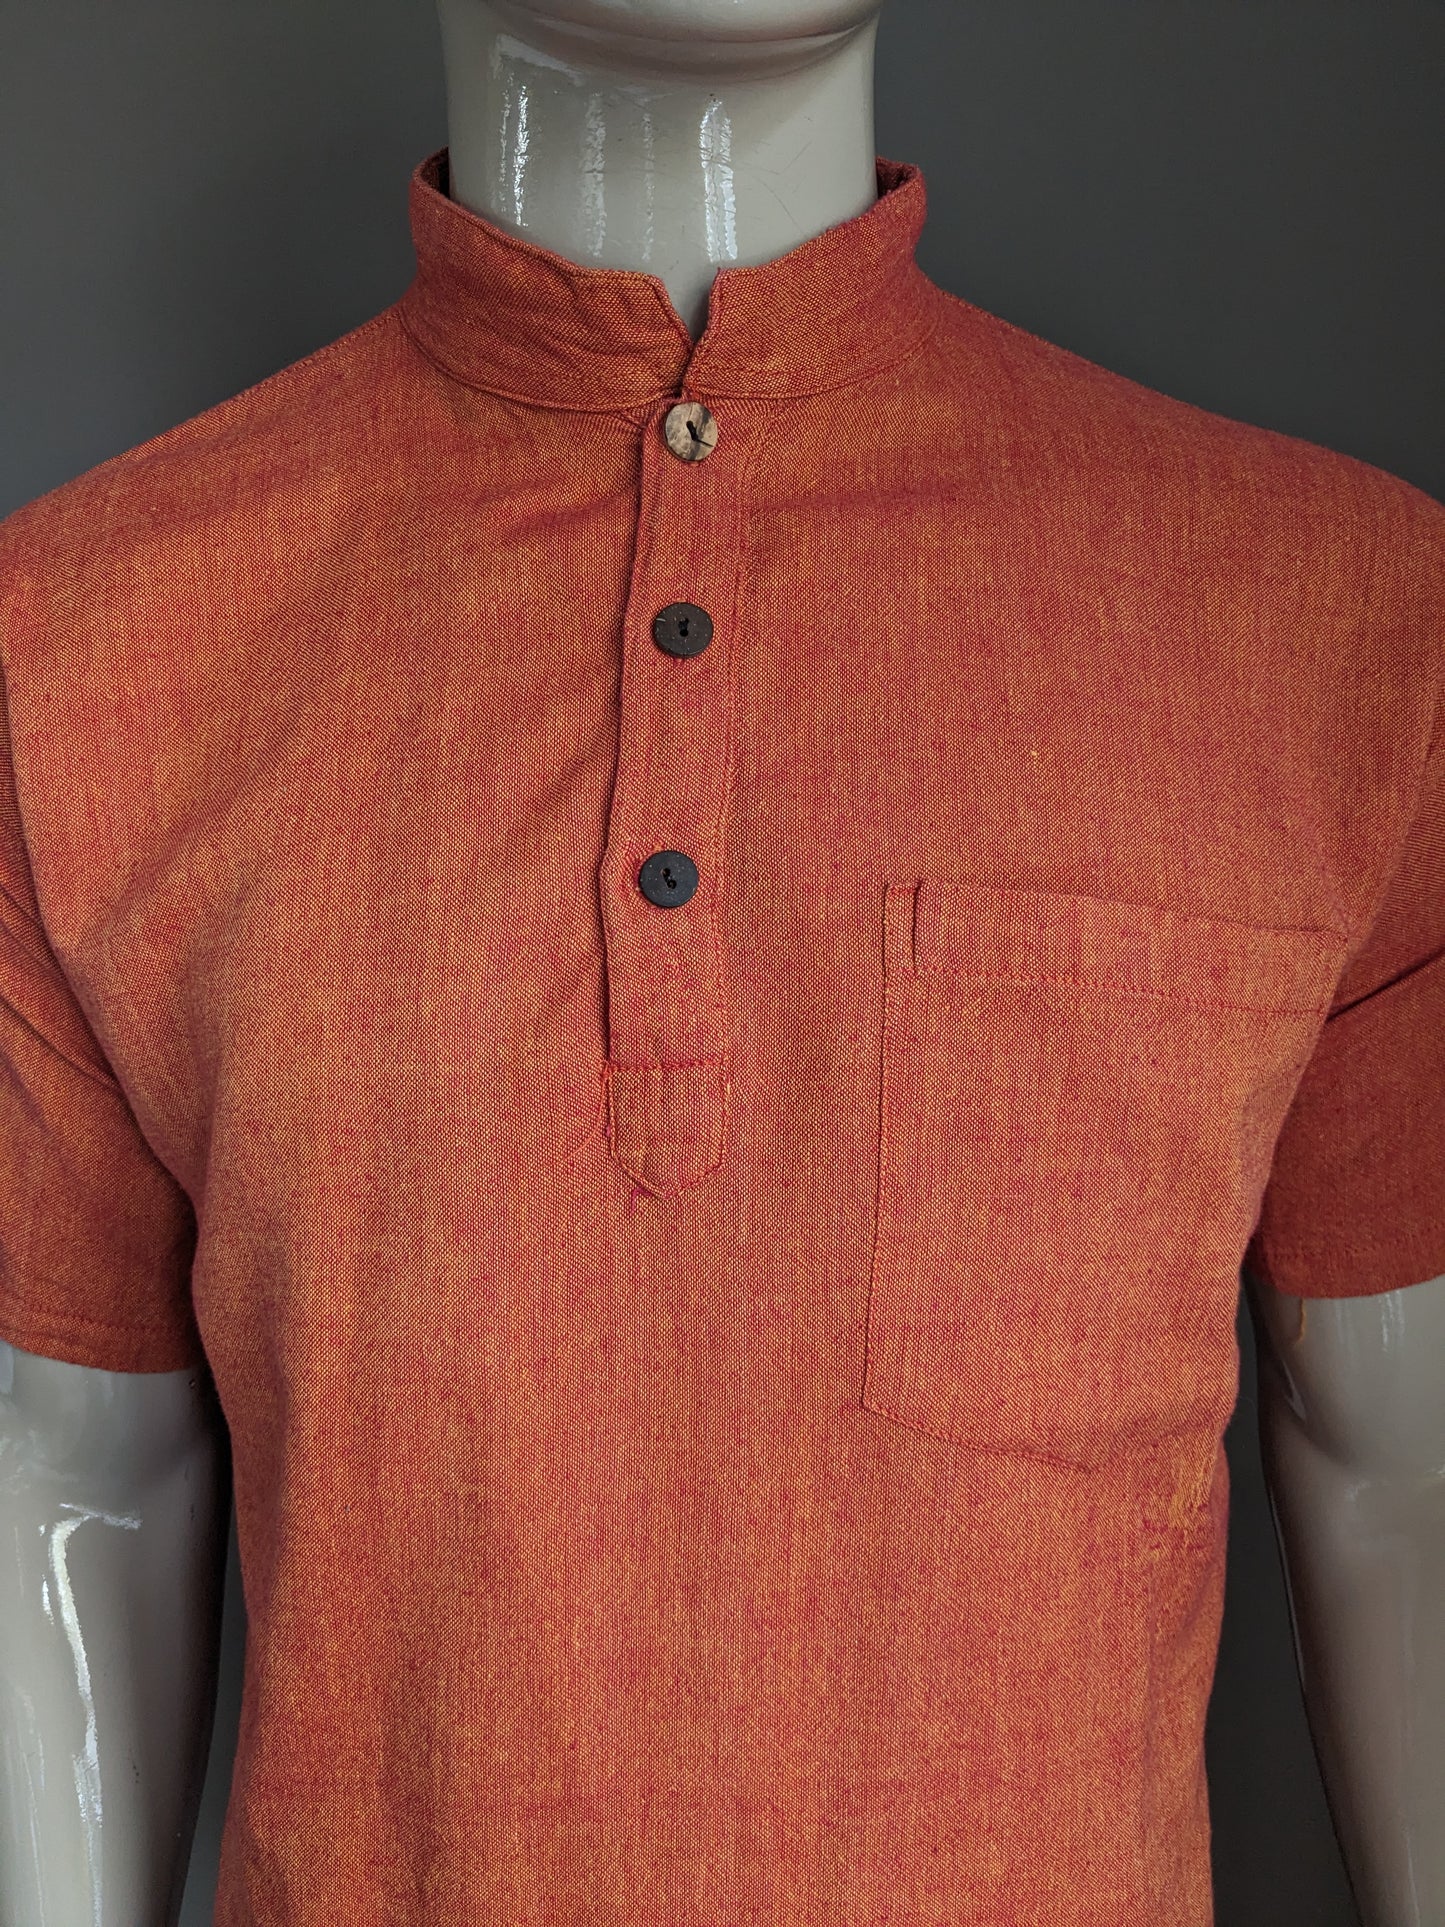 Le Grenier de Katmendou Shirt with Mao / Farmers / Standing Collar. Orange red mixed. Size L.